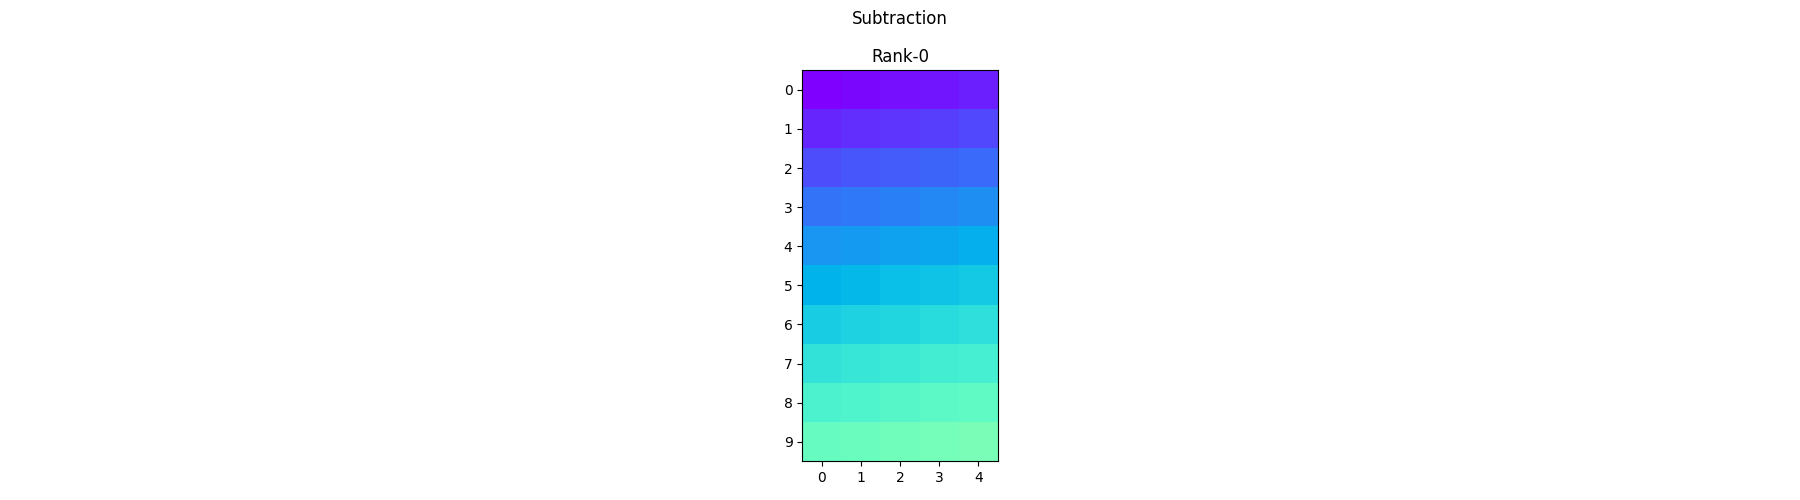 Subtraction, Rank-0